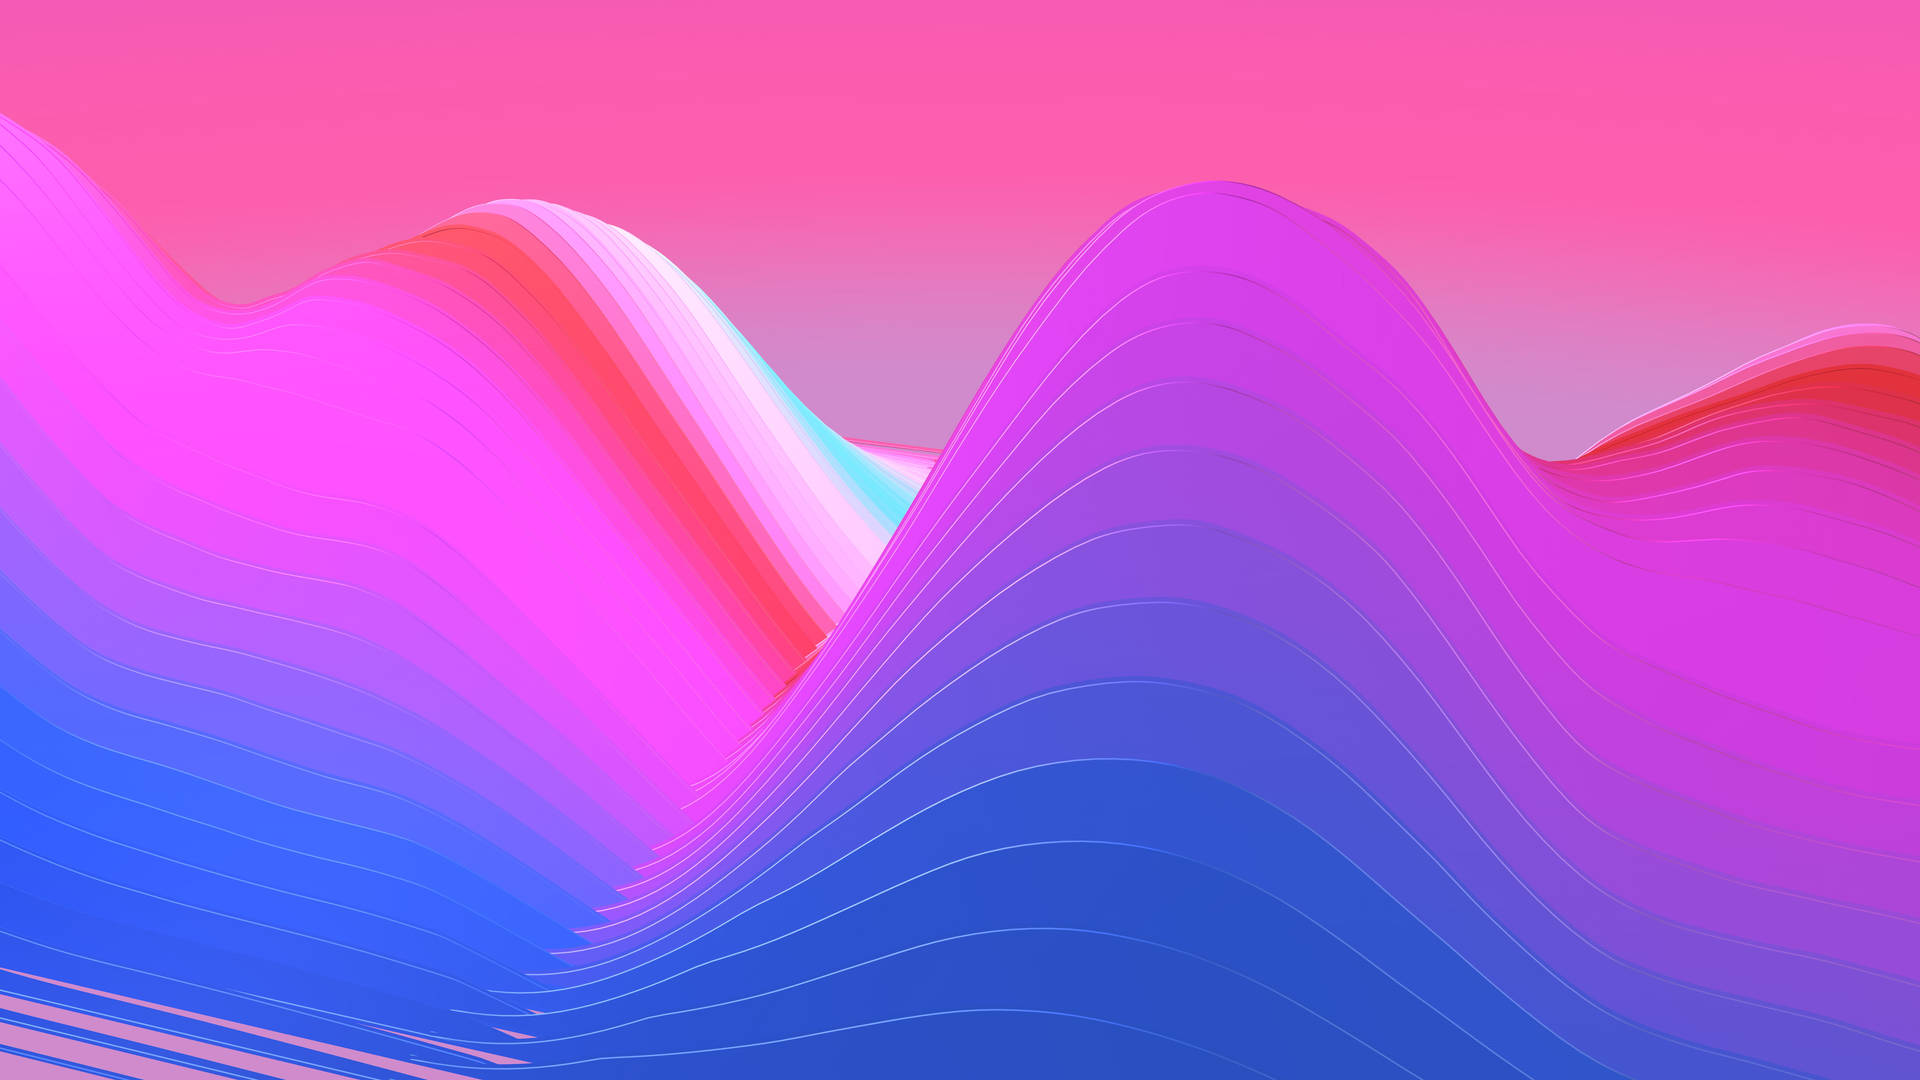 Caption: Vibrant Multicolored Waves On Iphone X Amoled Display Background